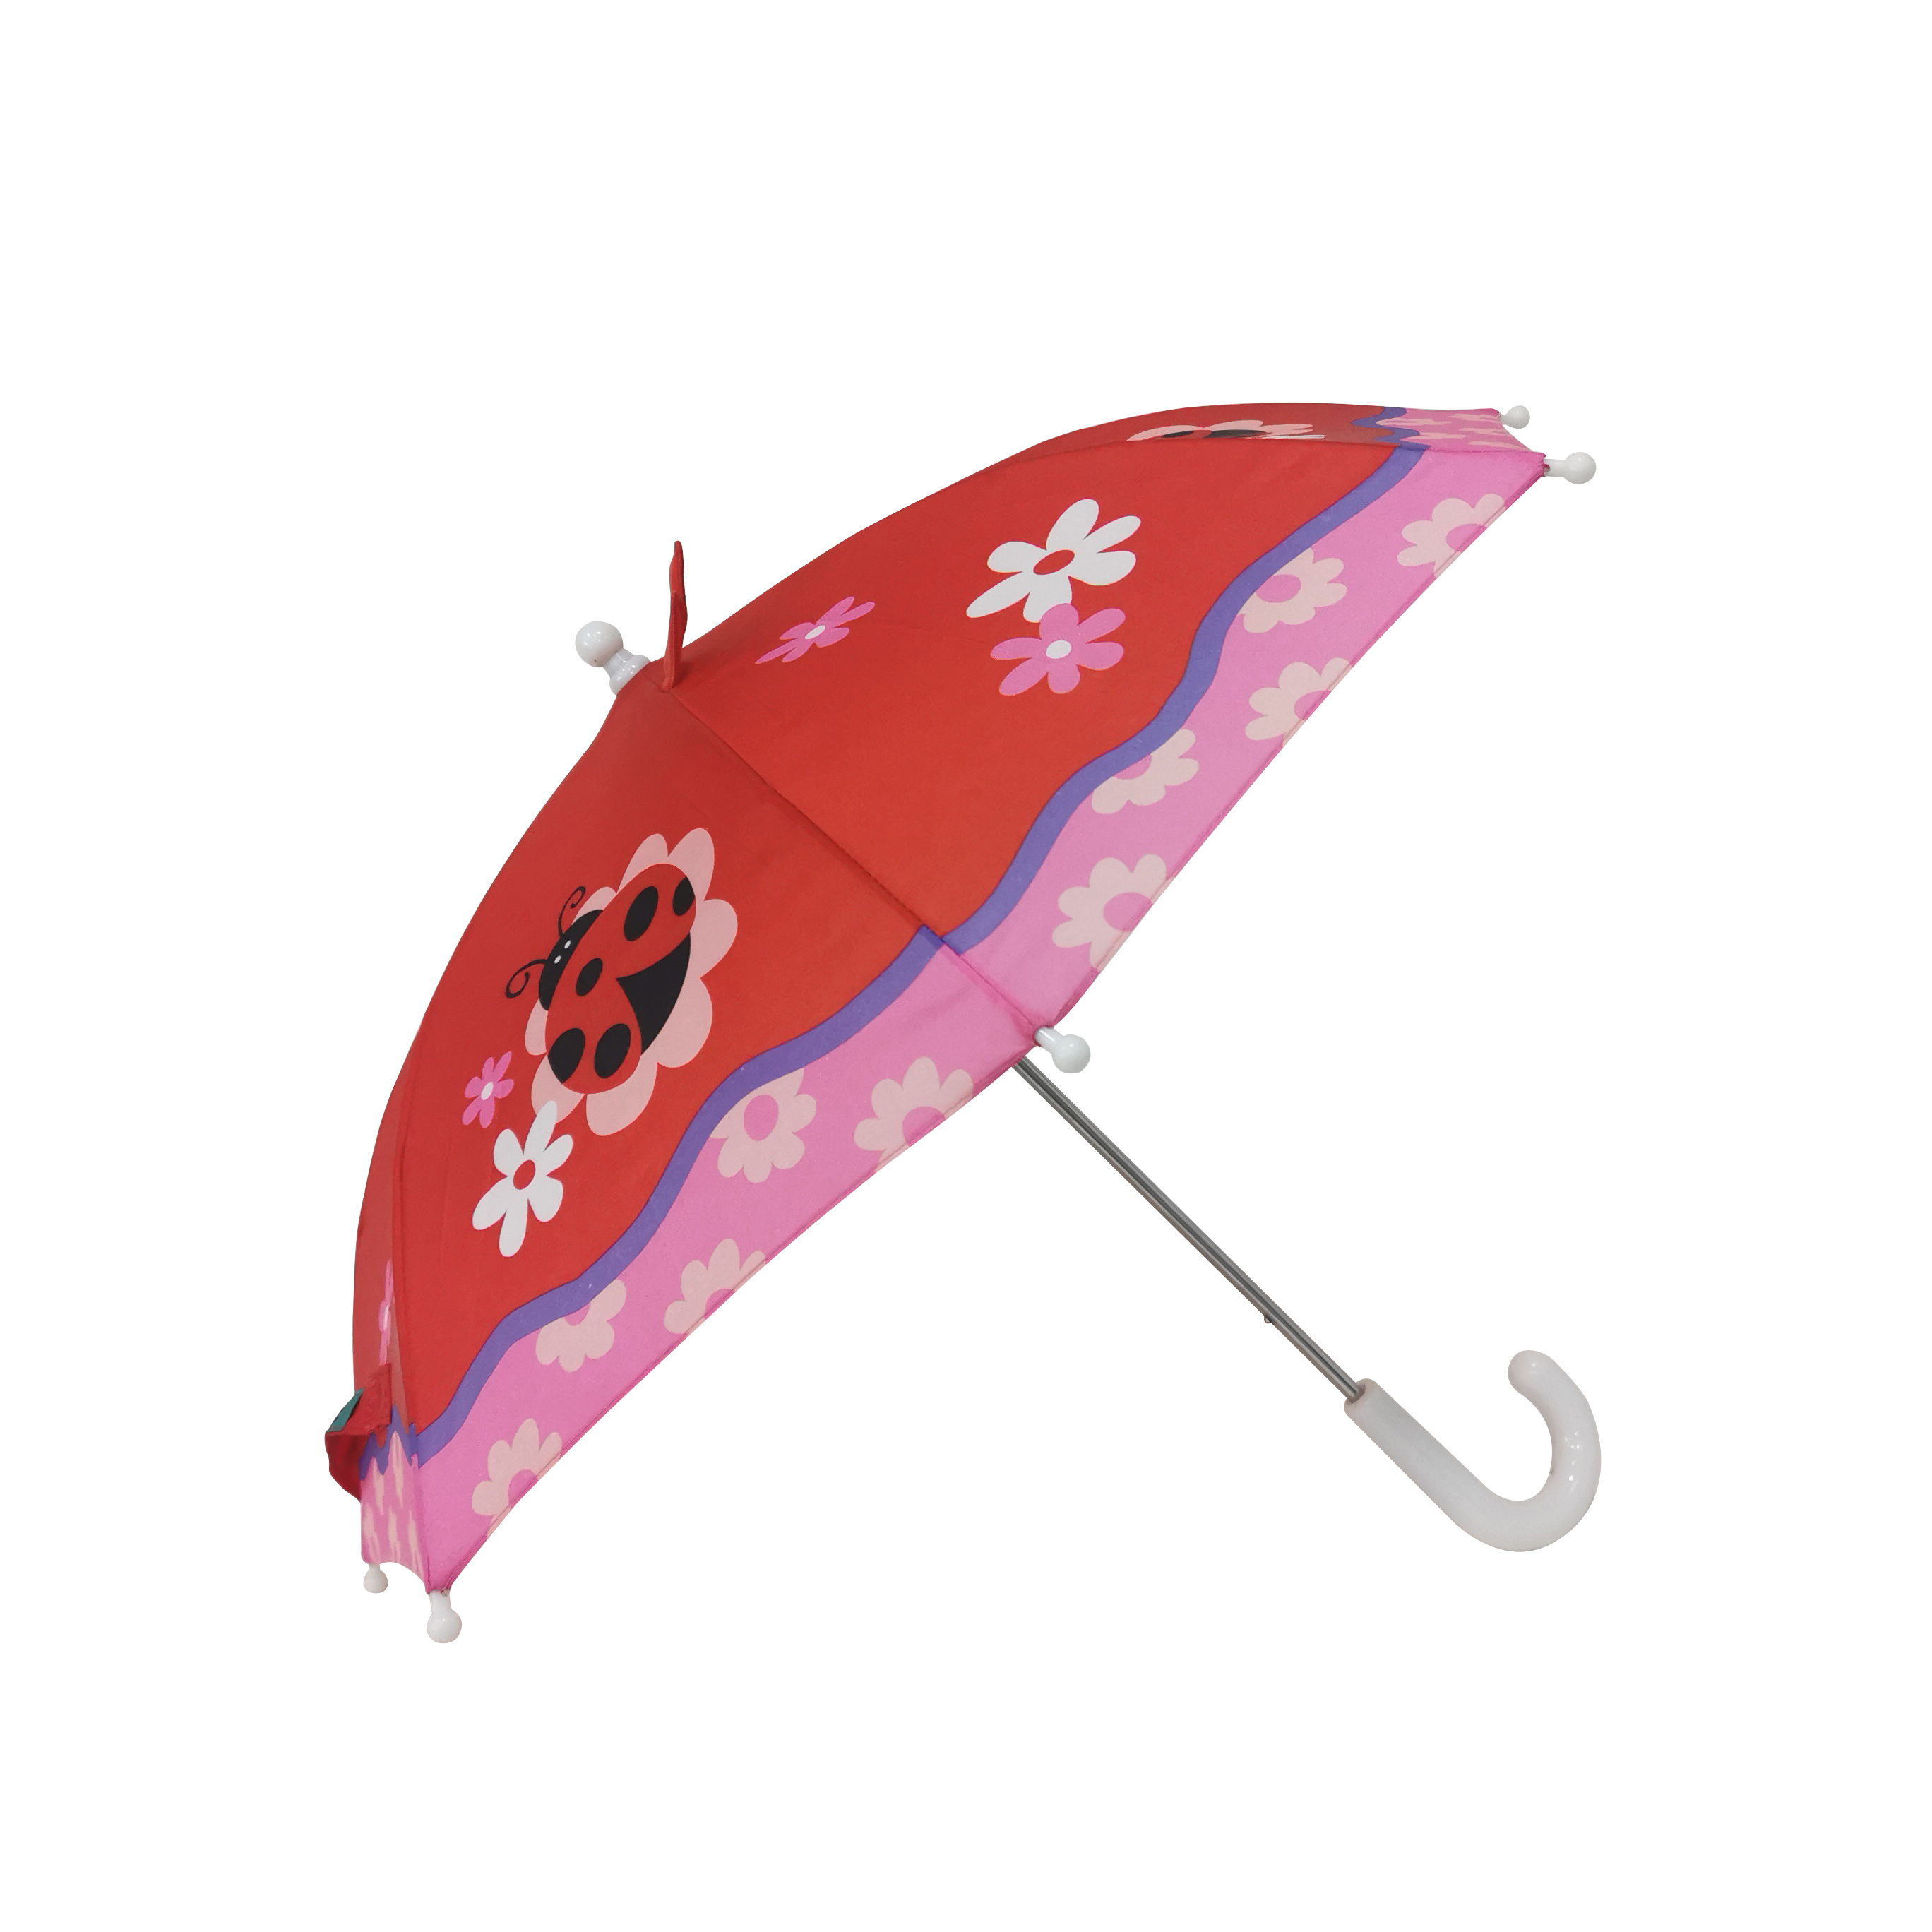 https://www.hodaumbrella.com/children-umbrella-with-ears-product/